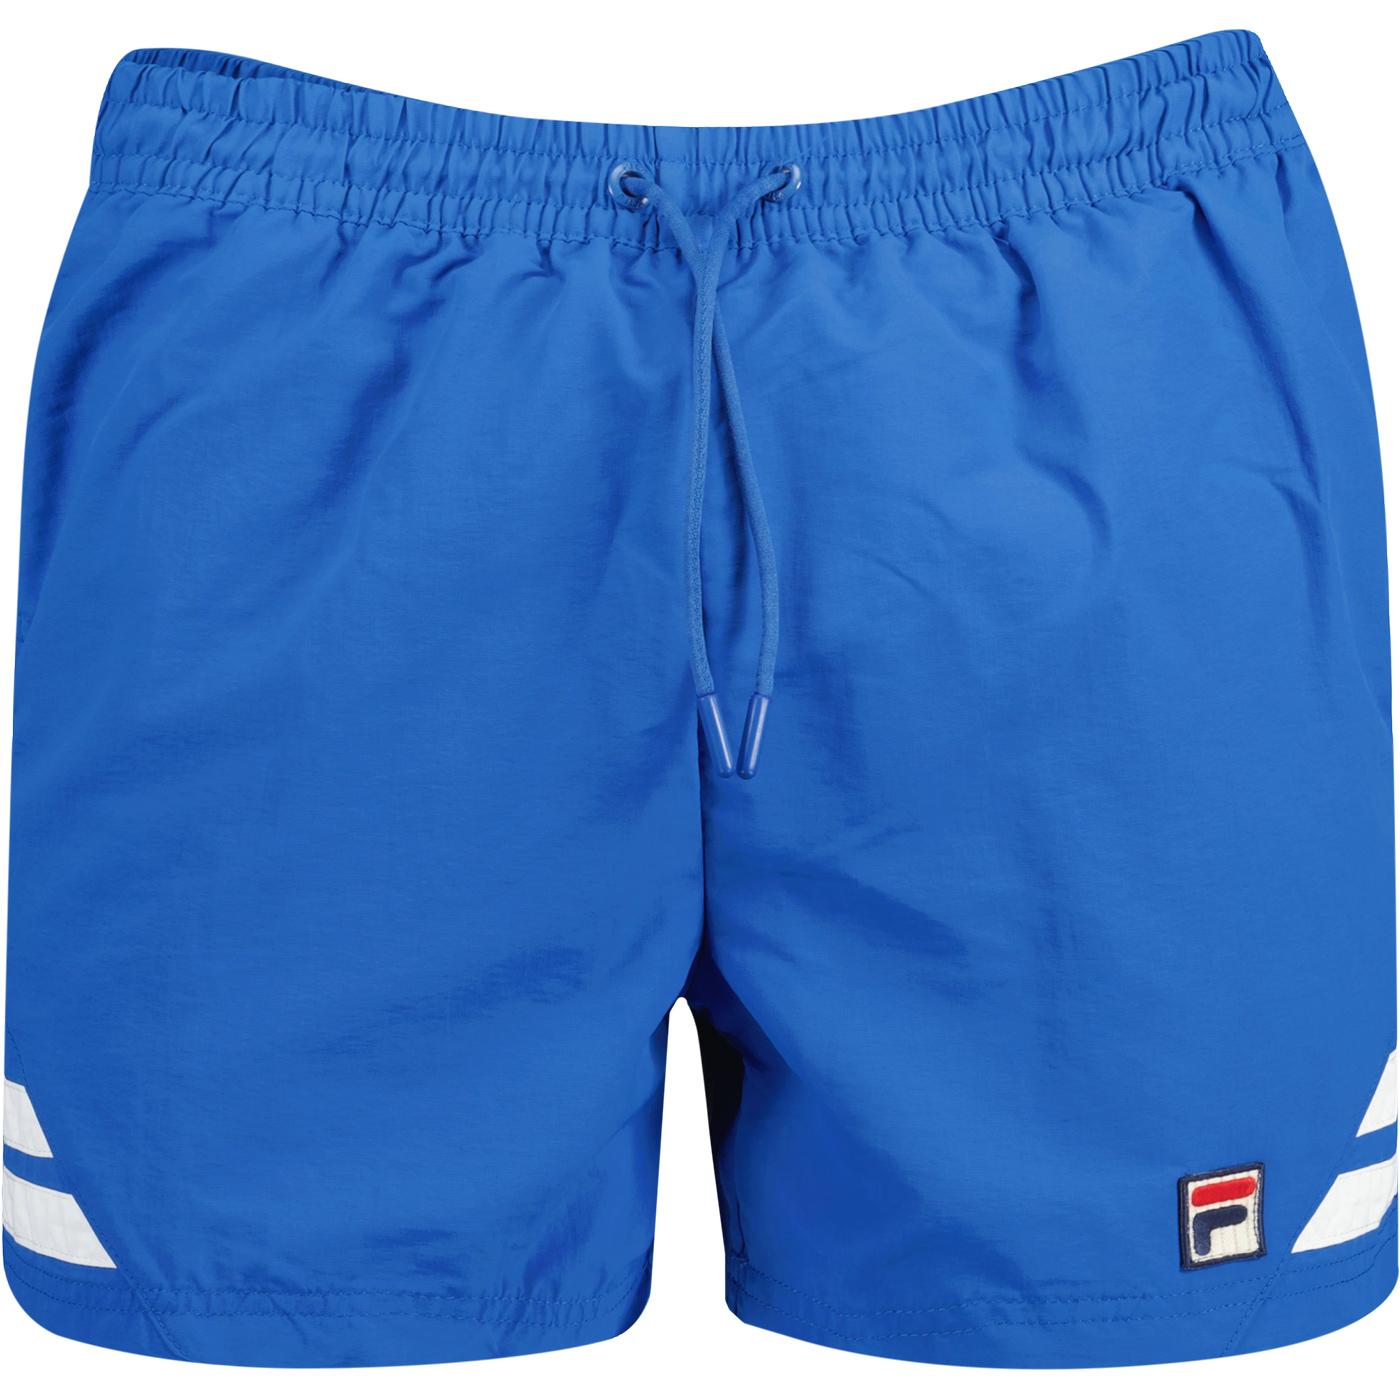 FILA VINTAGE Vantage Retro Stripe Swim Shorts in Strong Blue